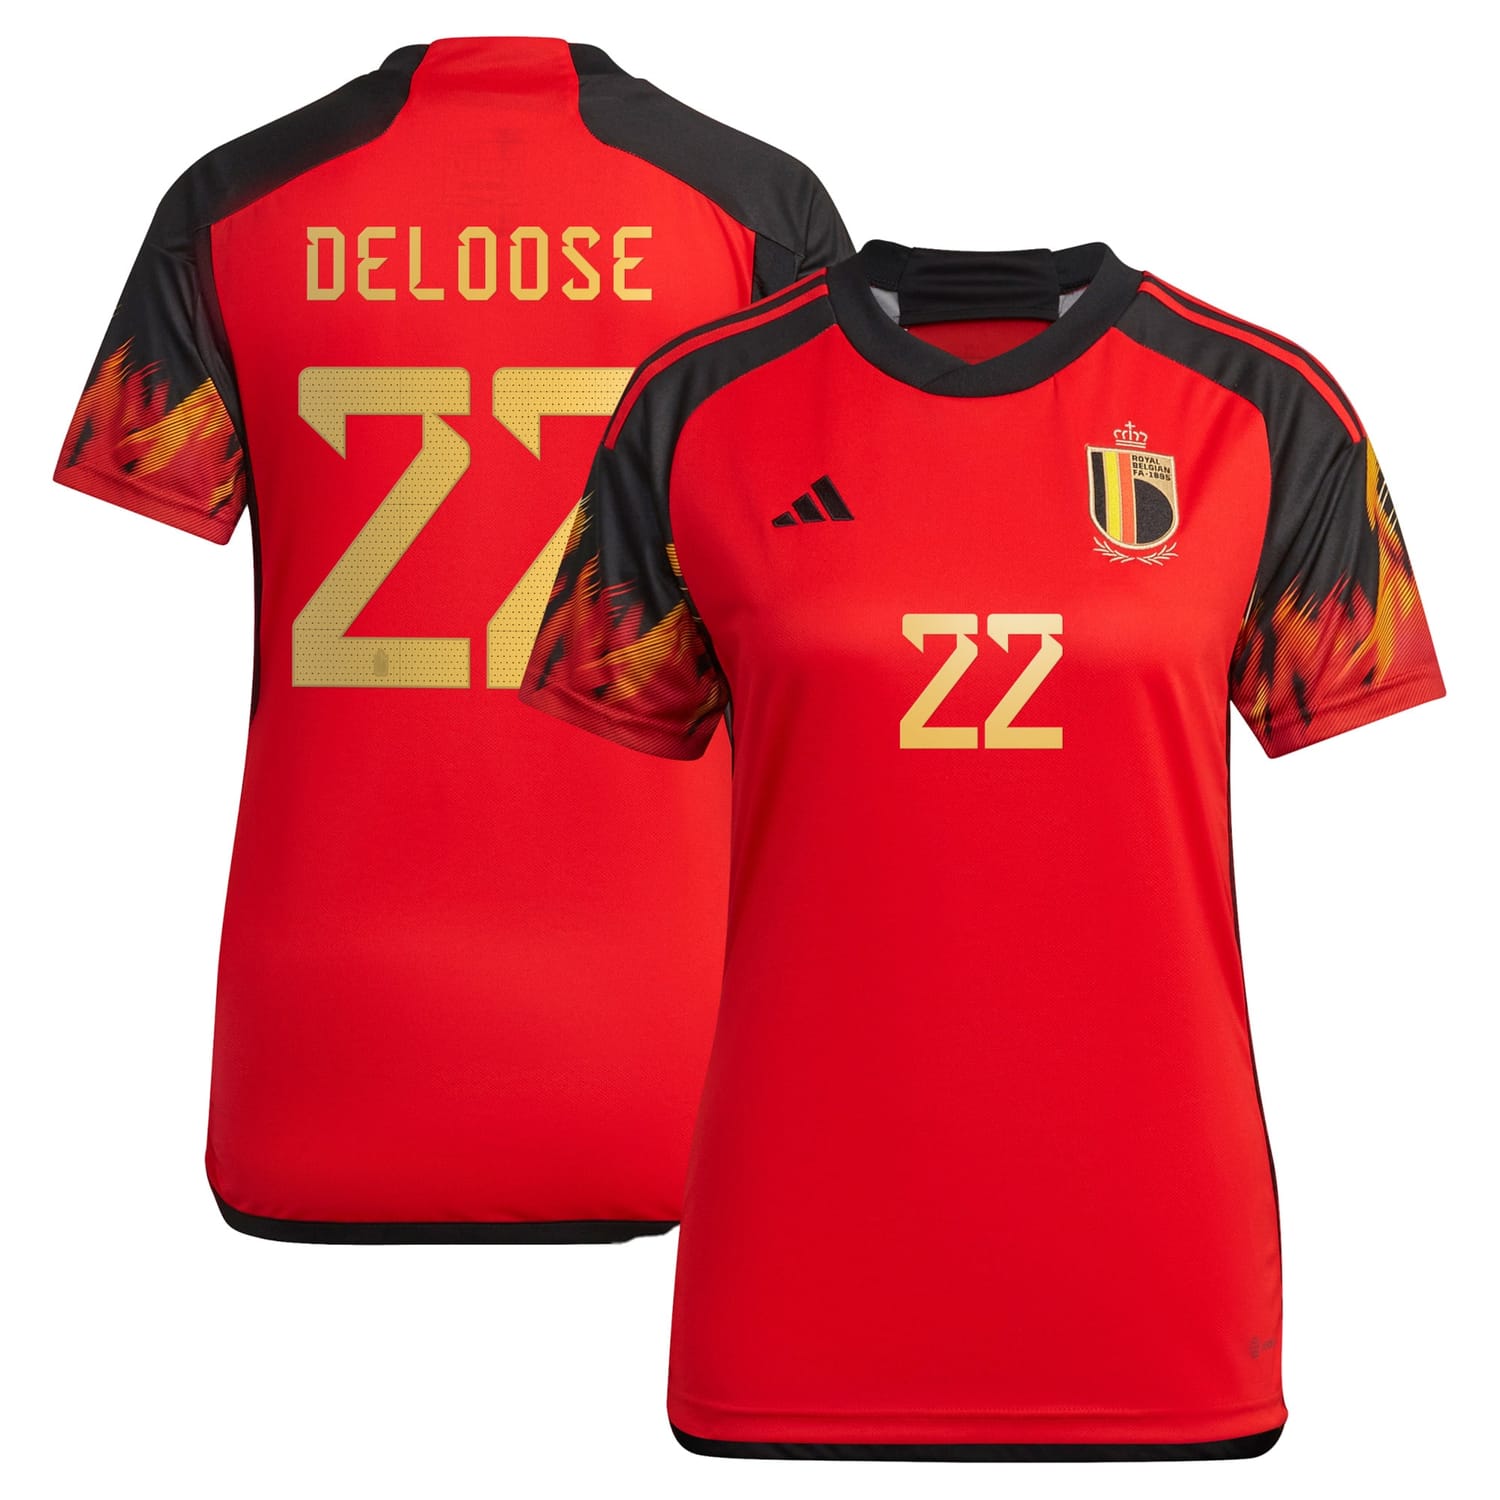 Belgium National Team Home Jersey Shirt 2022 player Laura Deloose 22 printing for Women